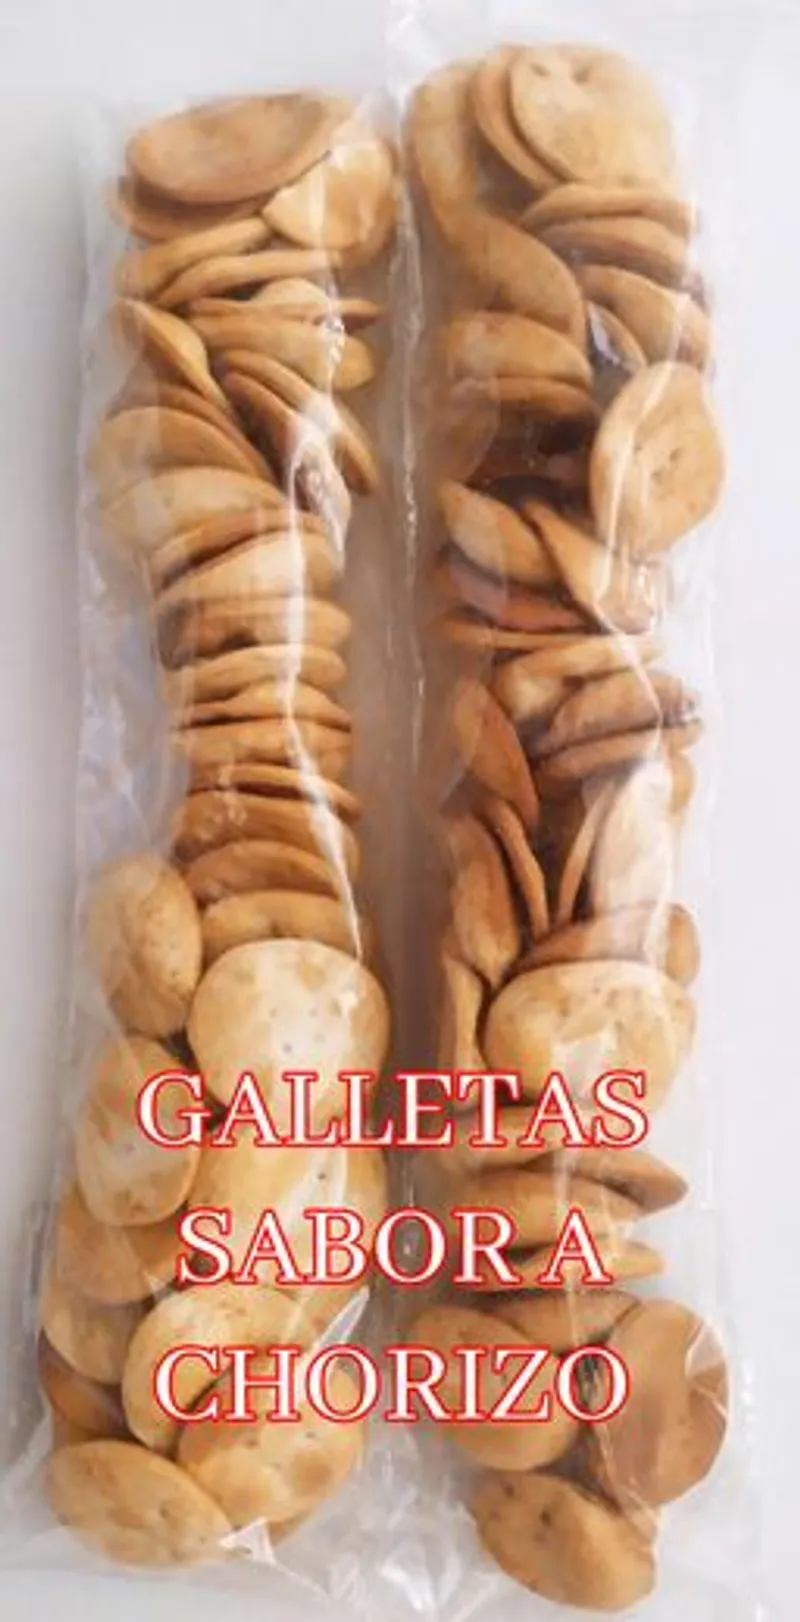 GALLETAS SABOR A CHORIZO (5pack)